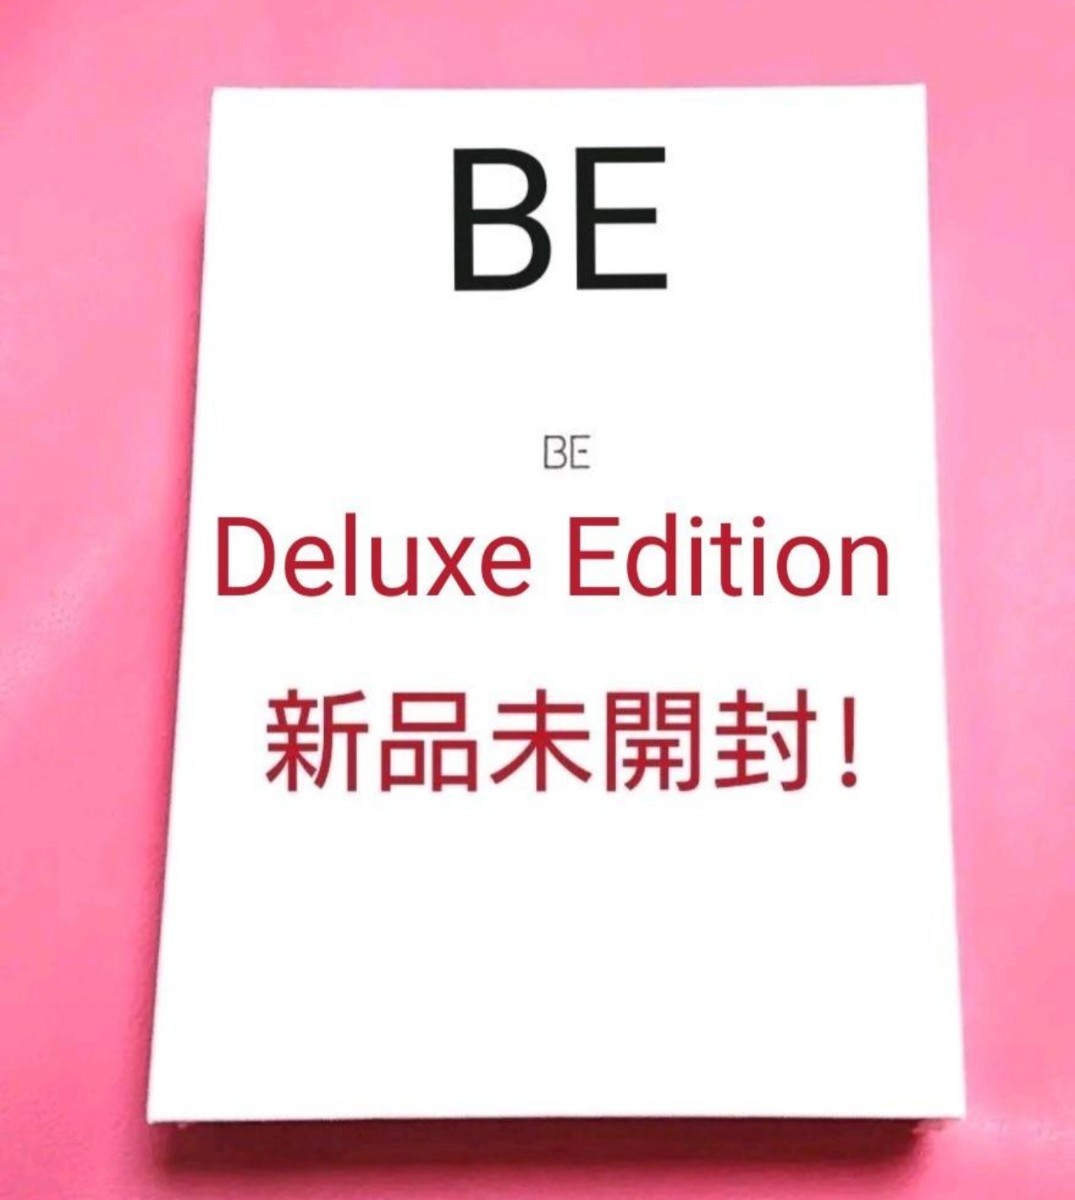 BTS 防弾少年団 バンタン BE Deluxe Edition 新品未開封品